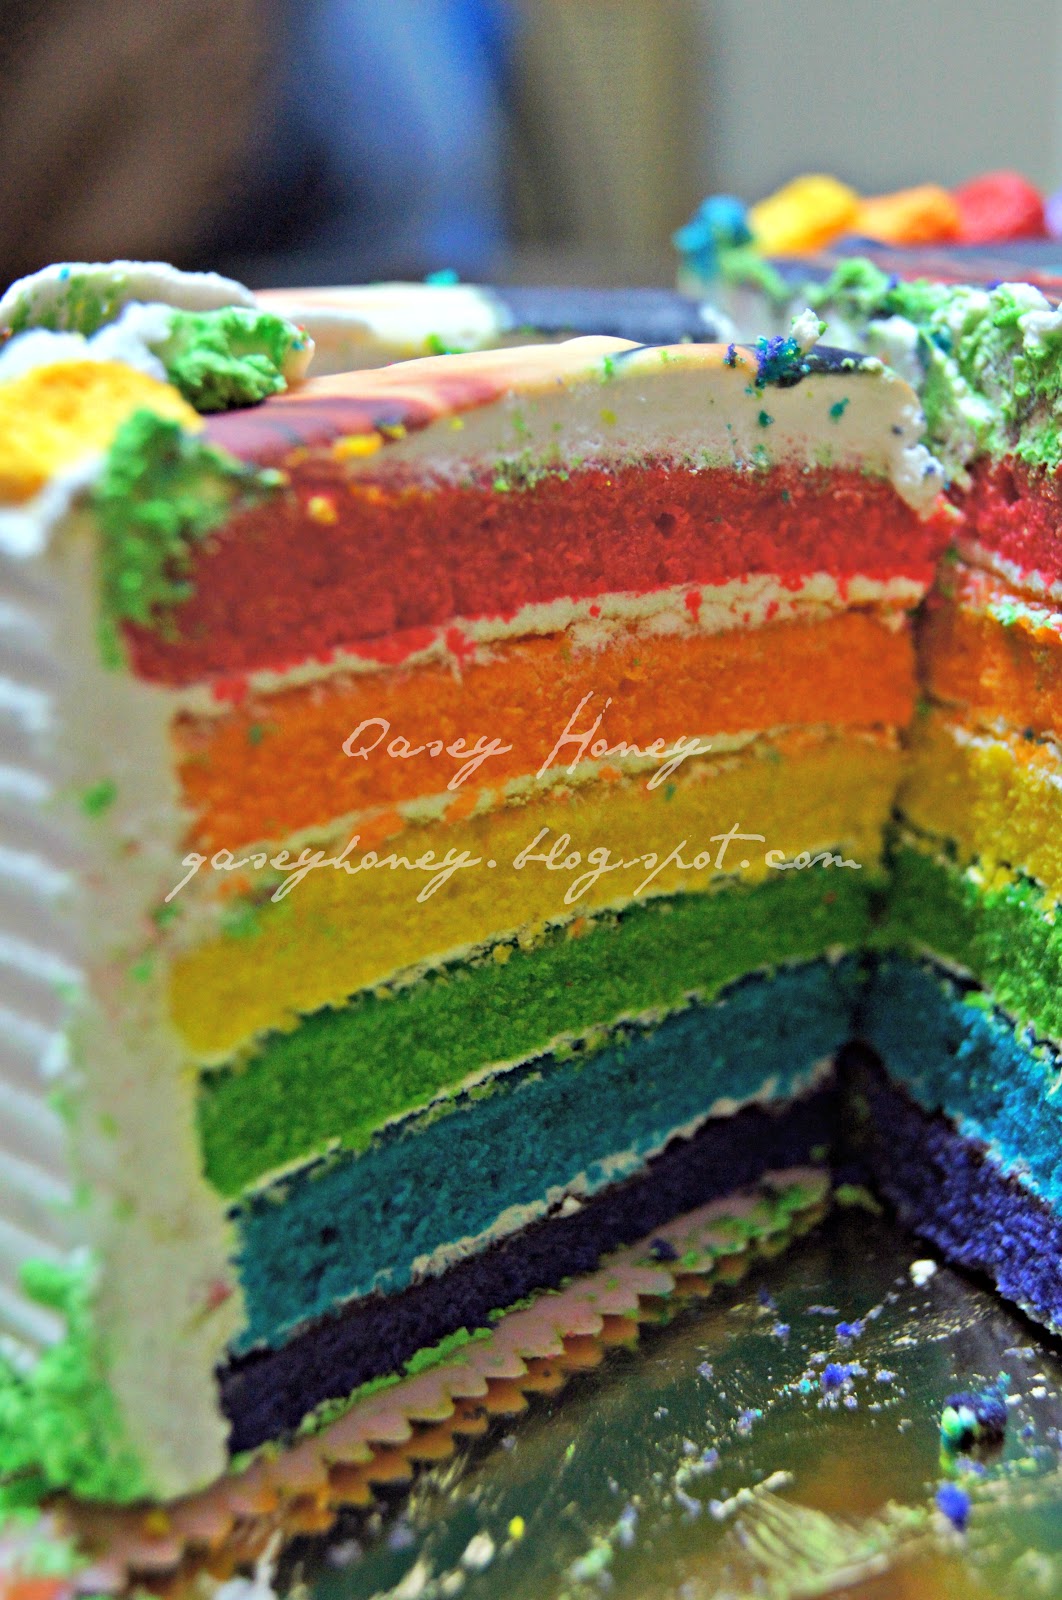 BESDAY REZA & RAINBOW CAKE  QASEY HONEY